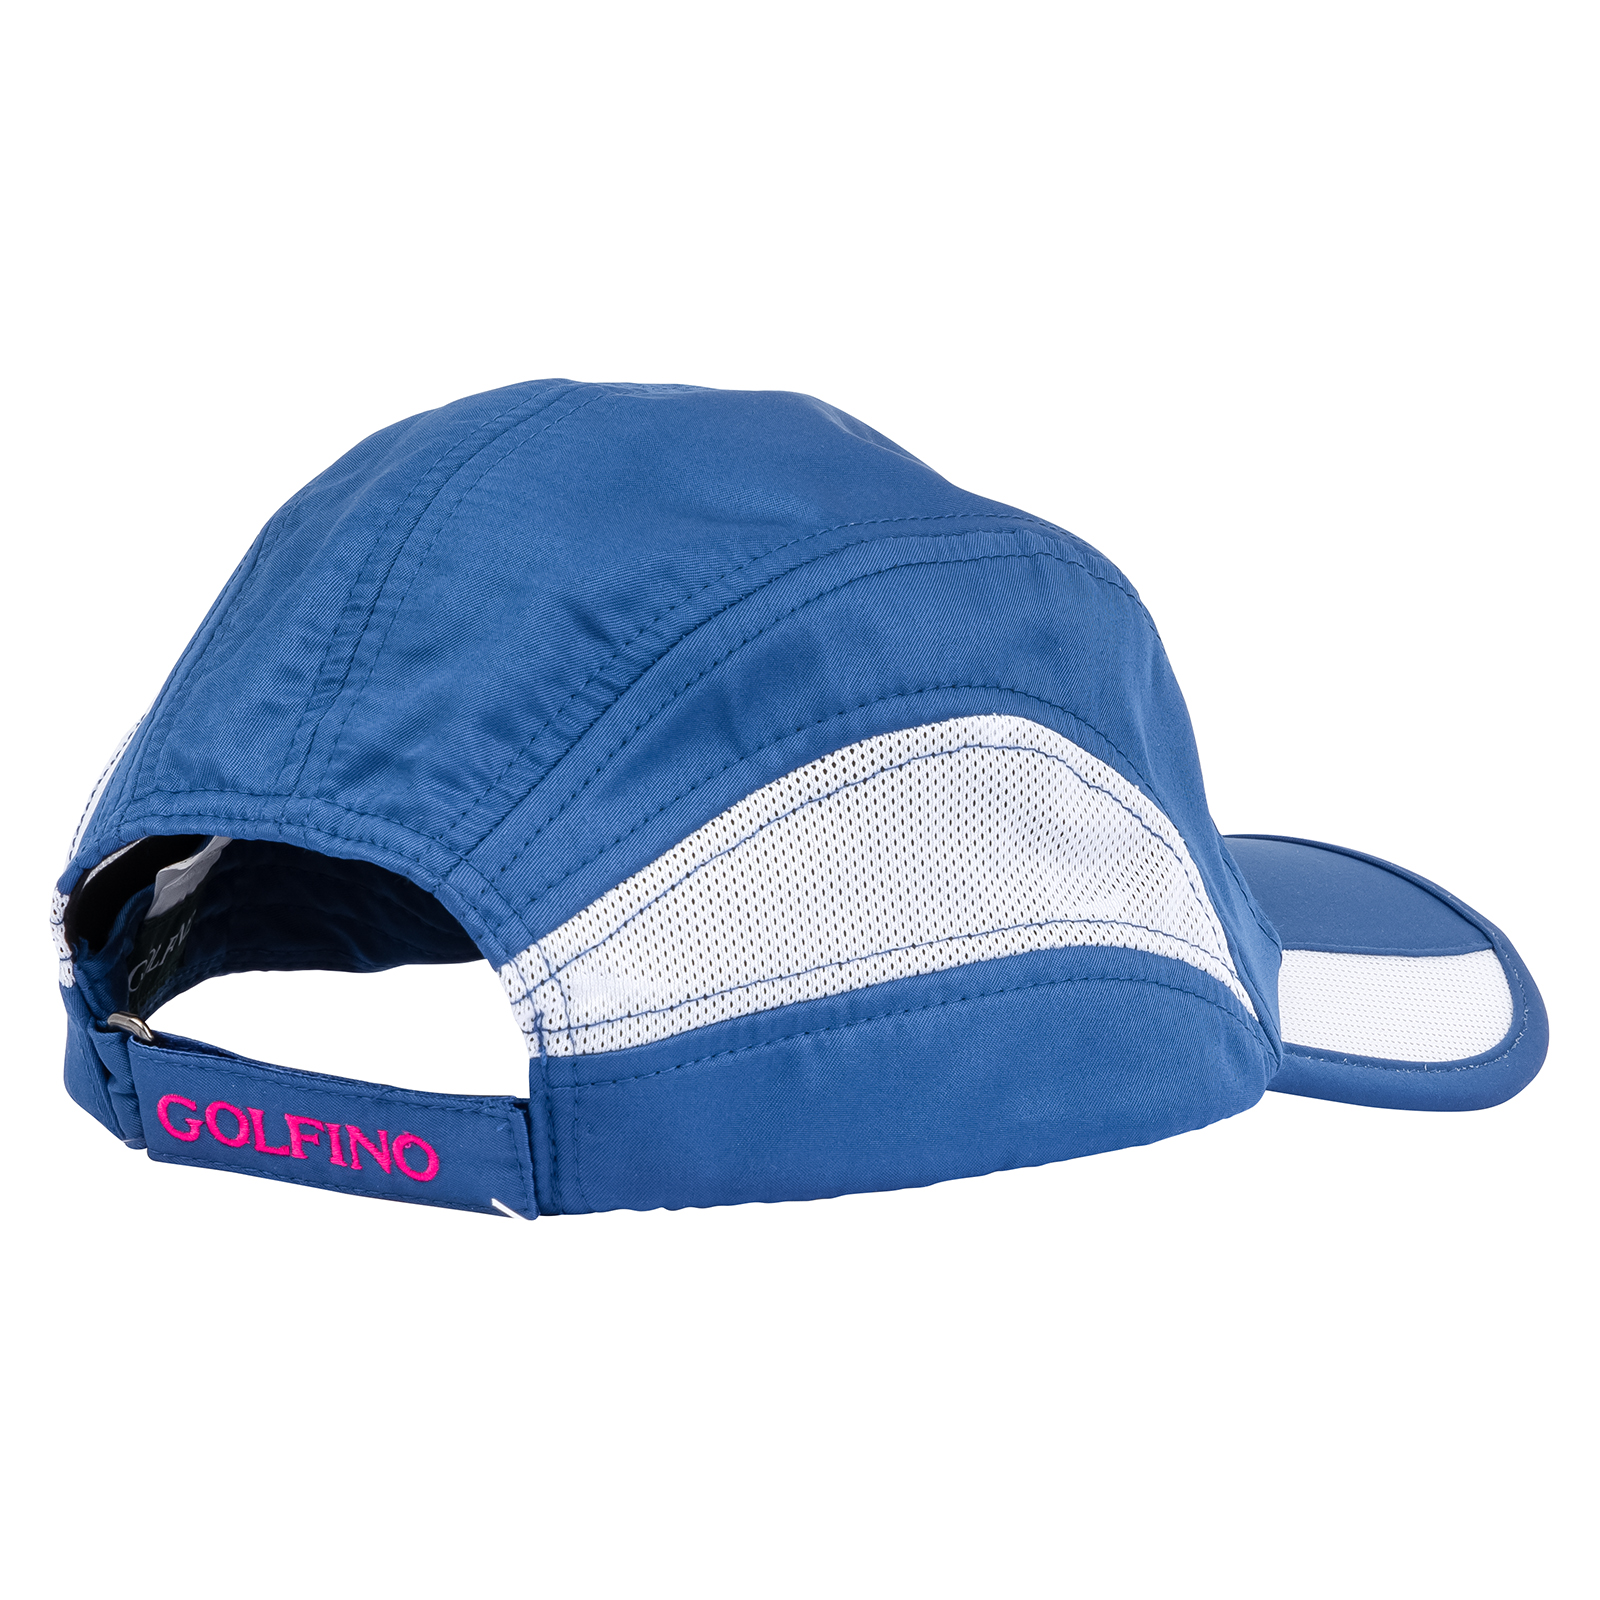 Comfortable and durable men's cap